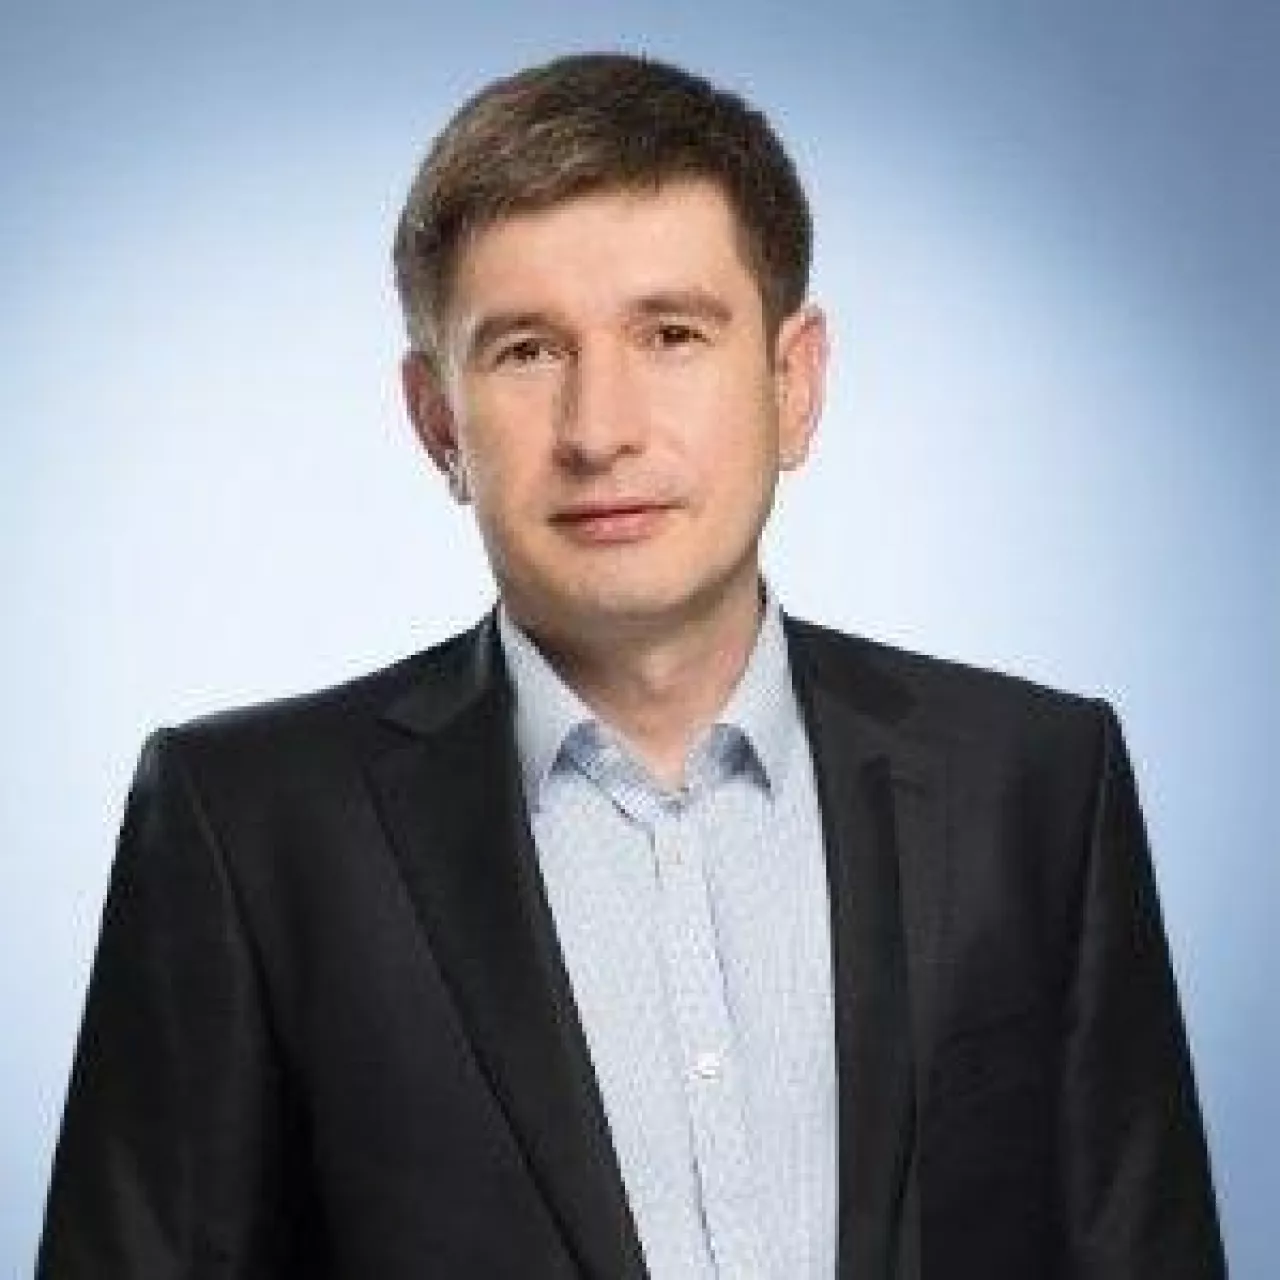 Janusz Selwa - Head Of Strategic Purchasing w REWE Group (fot. LinkedIn)